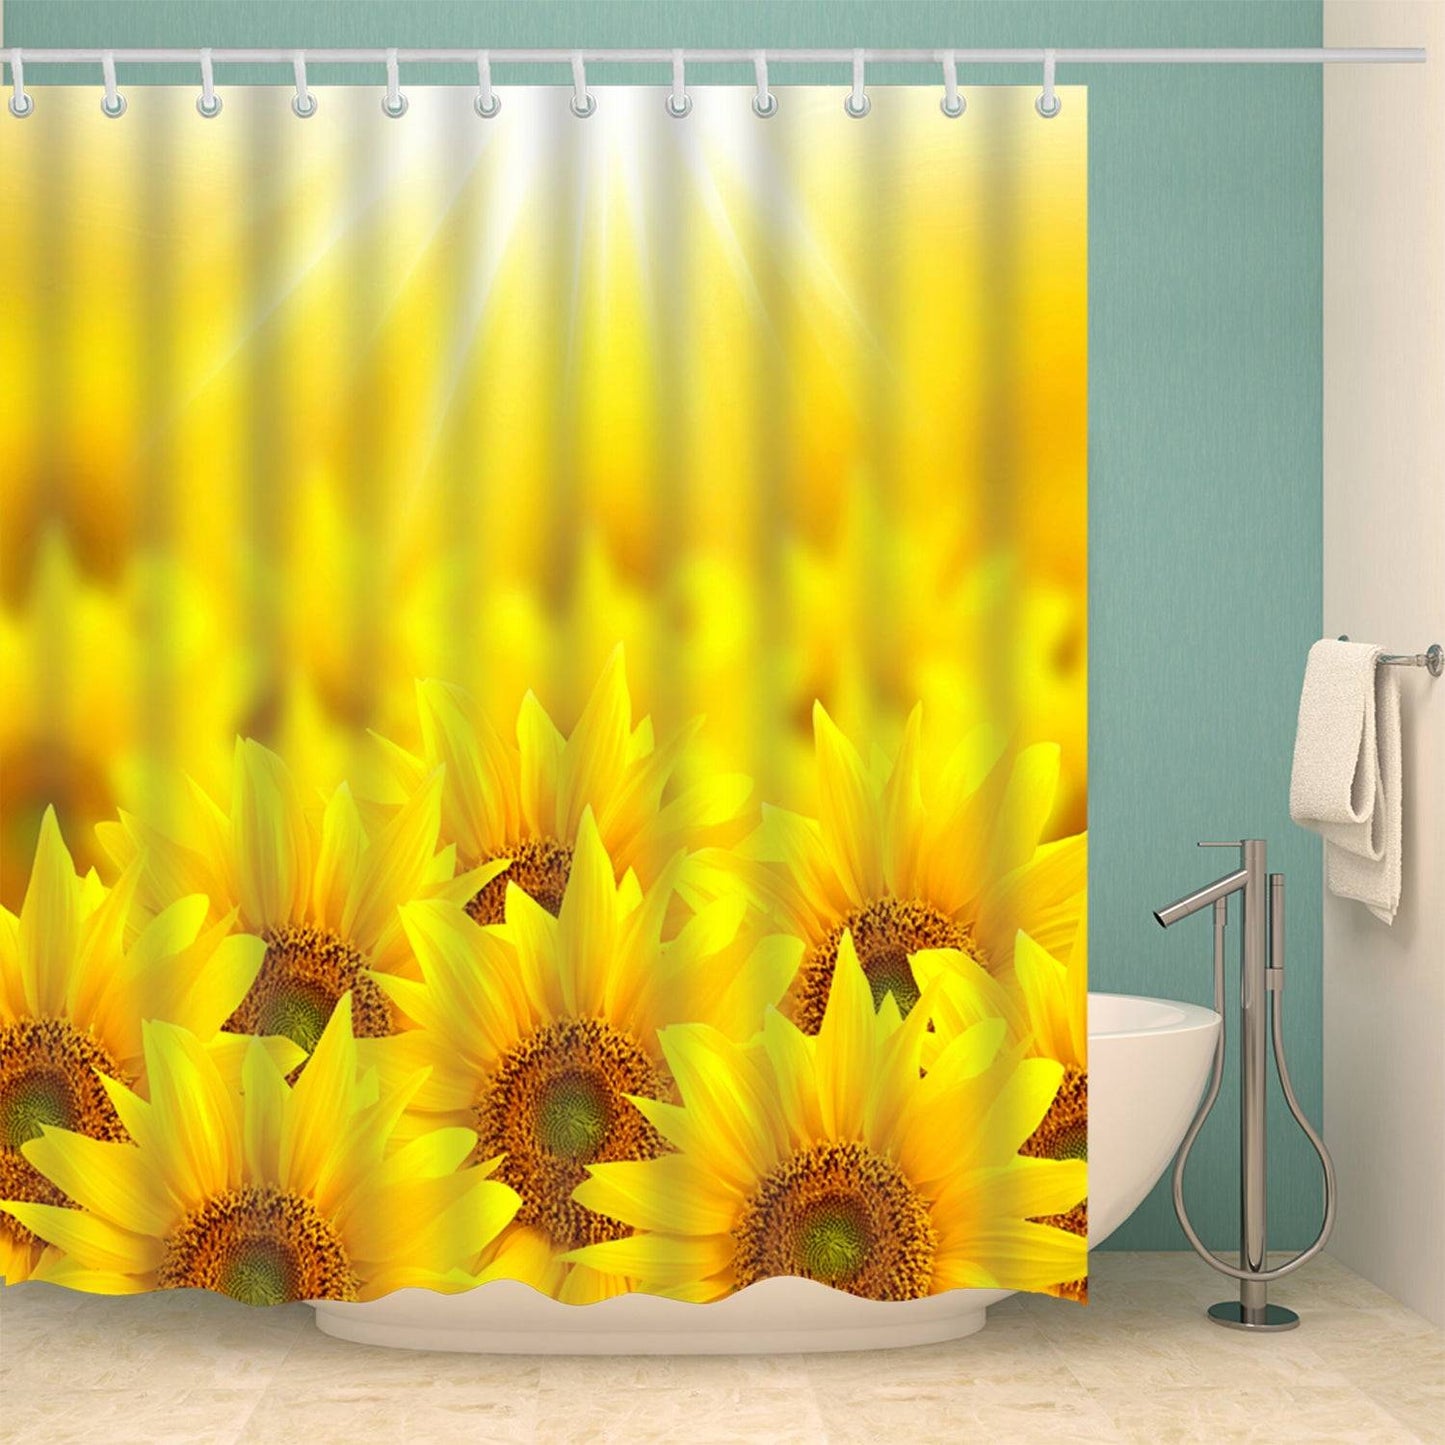 Minimalistic Sunny Sunflower Sea Shower Curtain | Sea of Sunflowers Shower Curtain